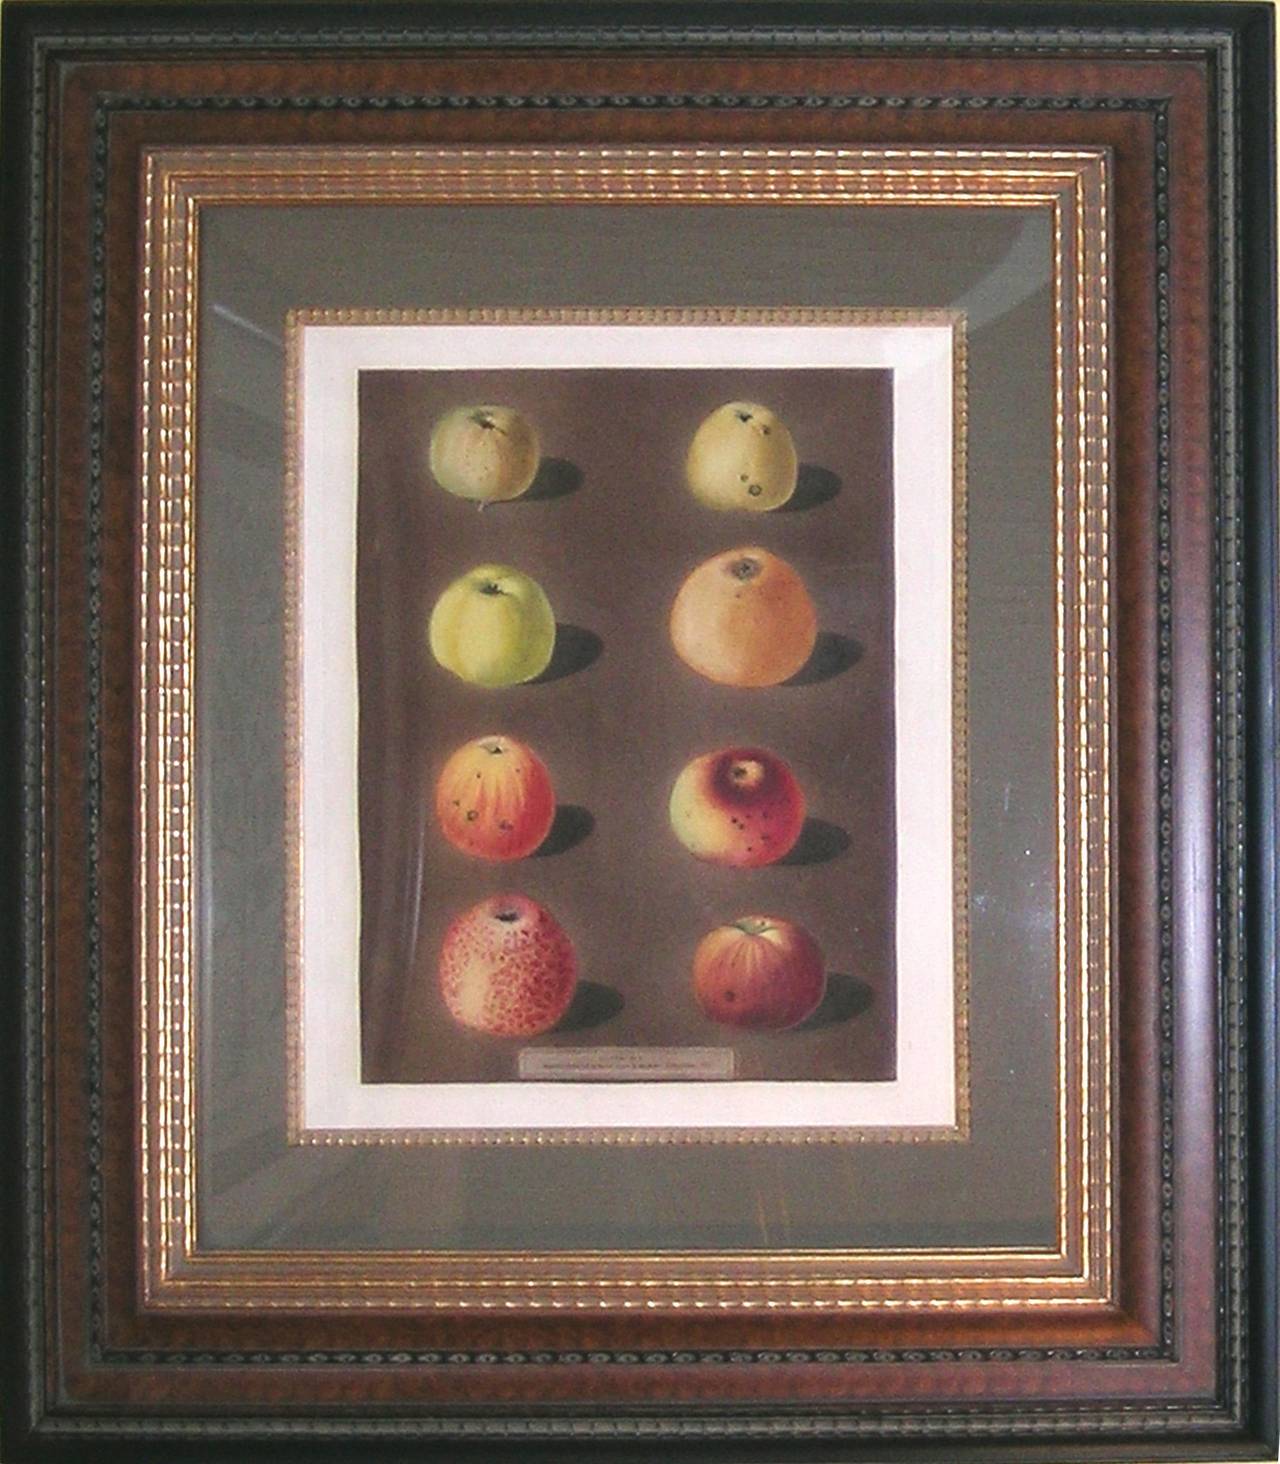 Plate 91.  Apples. - Print by george brookshaw